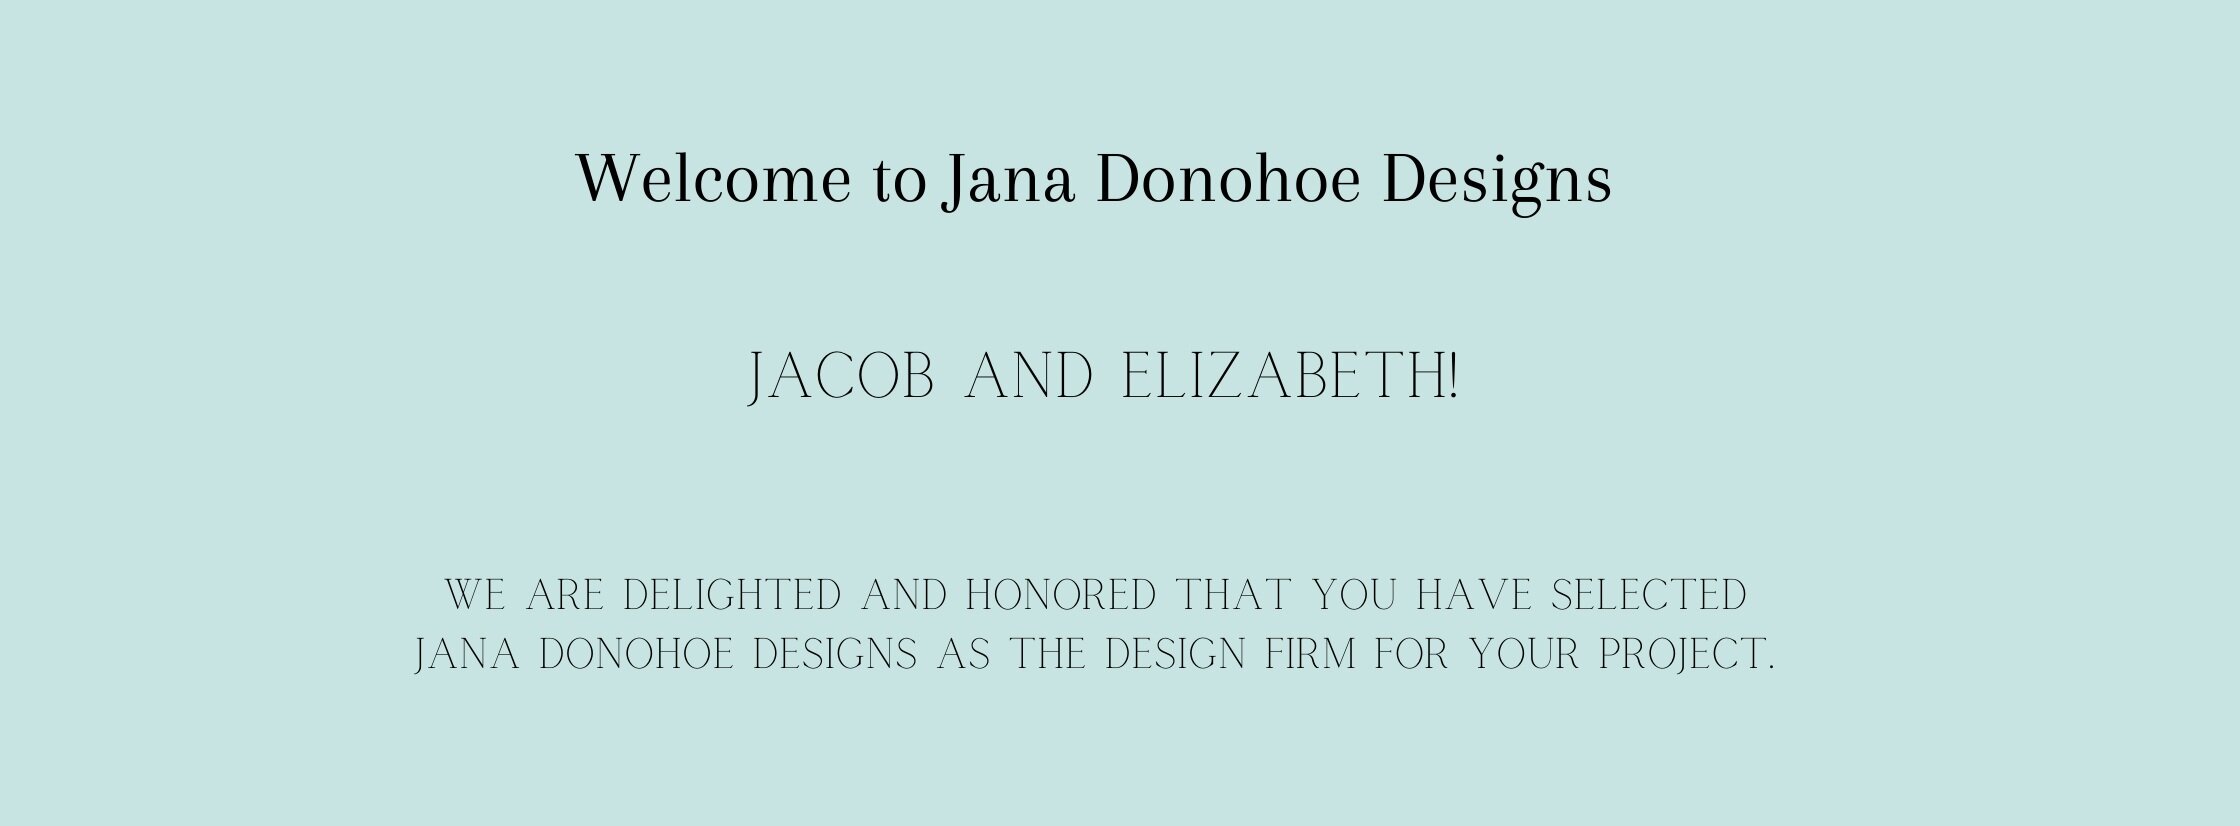 Welcome+to+Jana+Donohoe+Designs.jpg